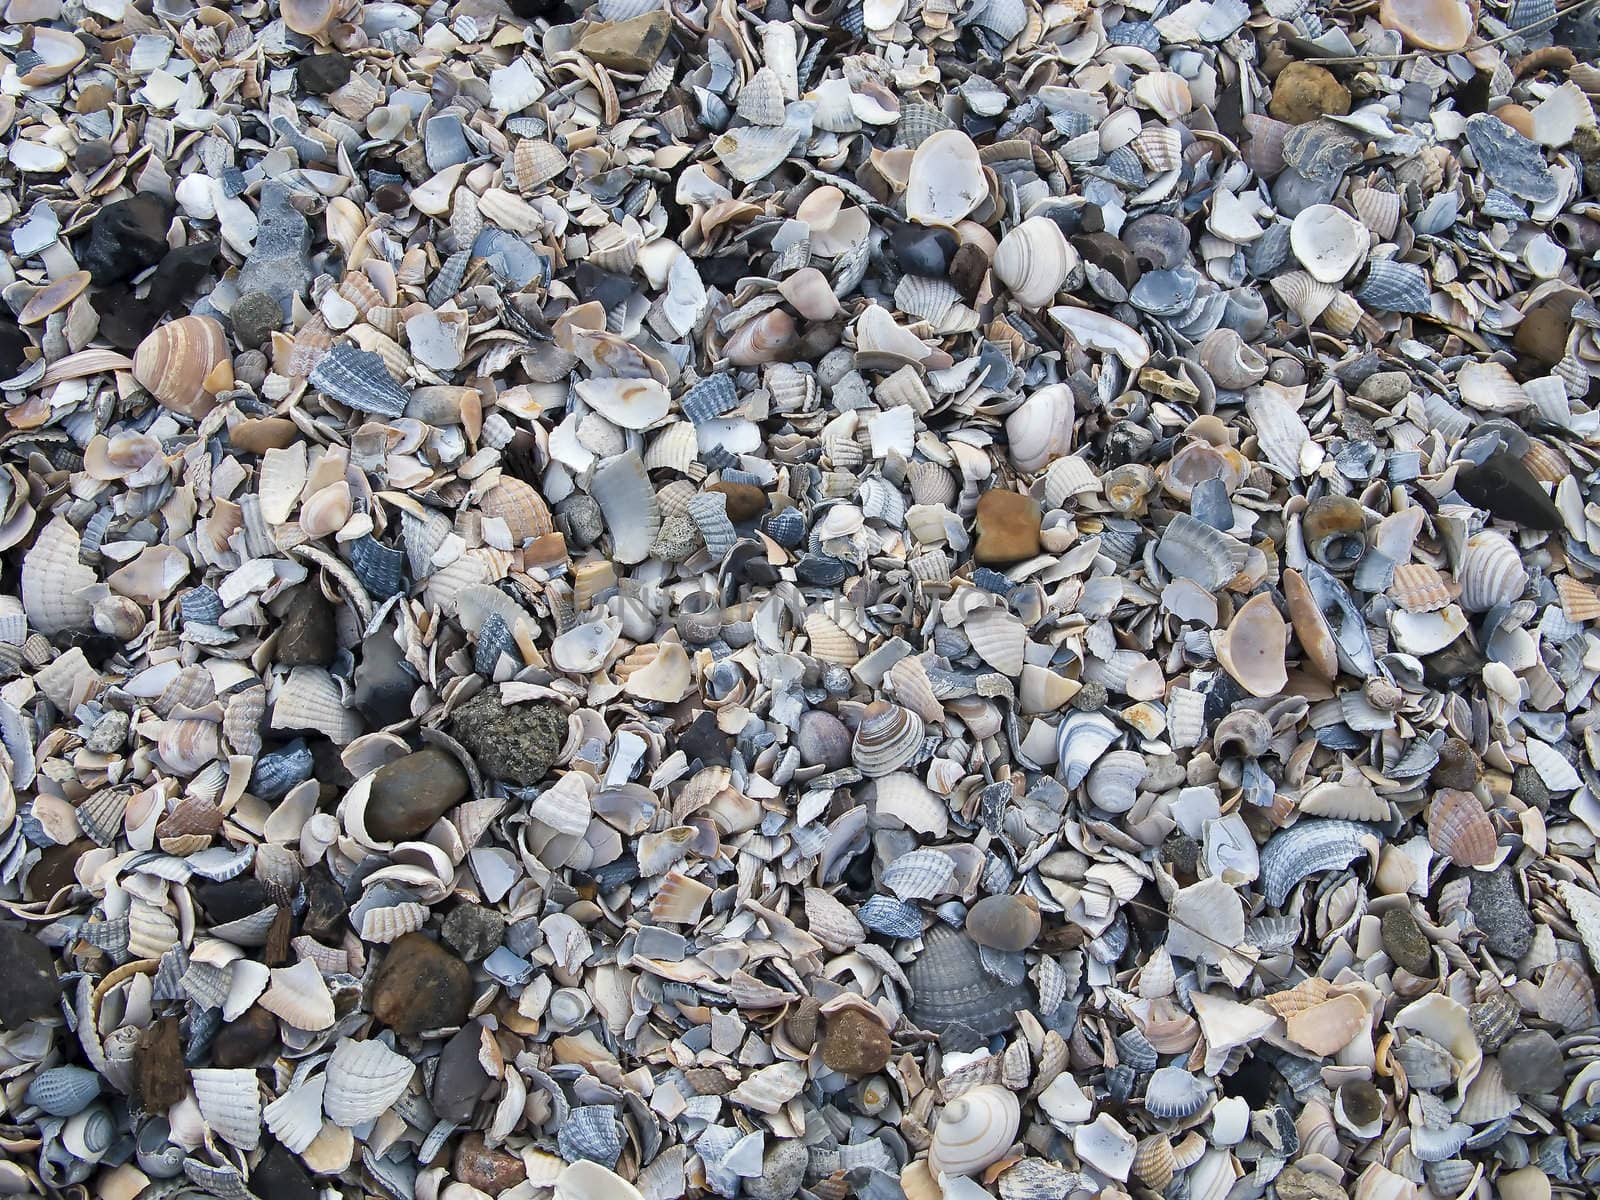 Shells and stones mixed